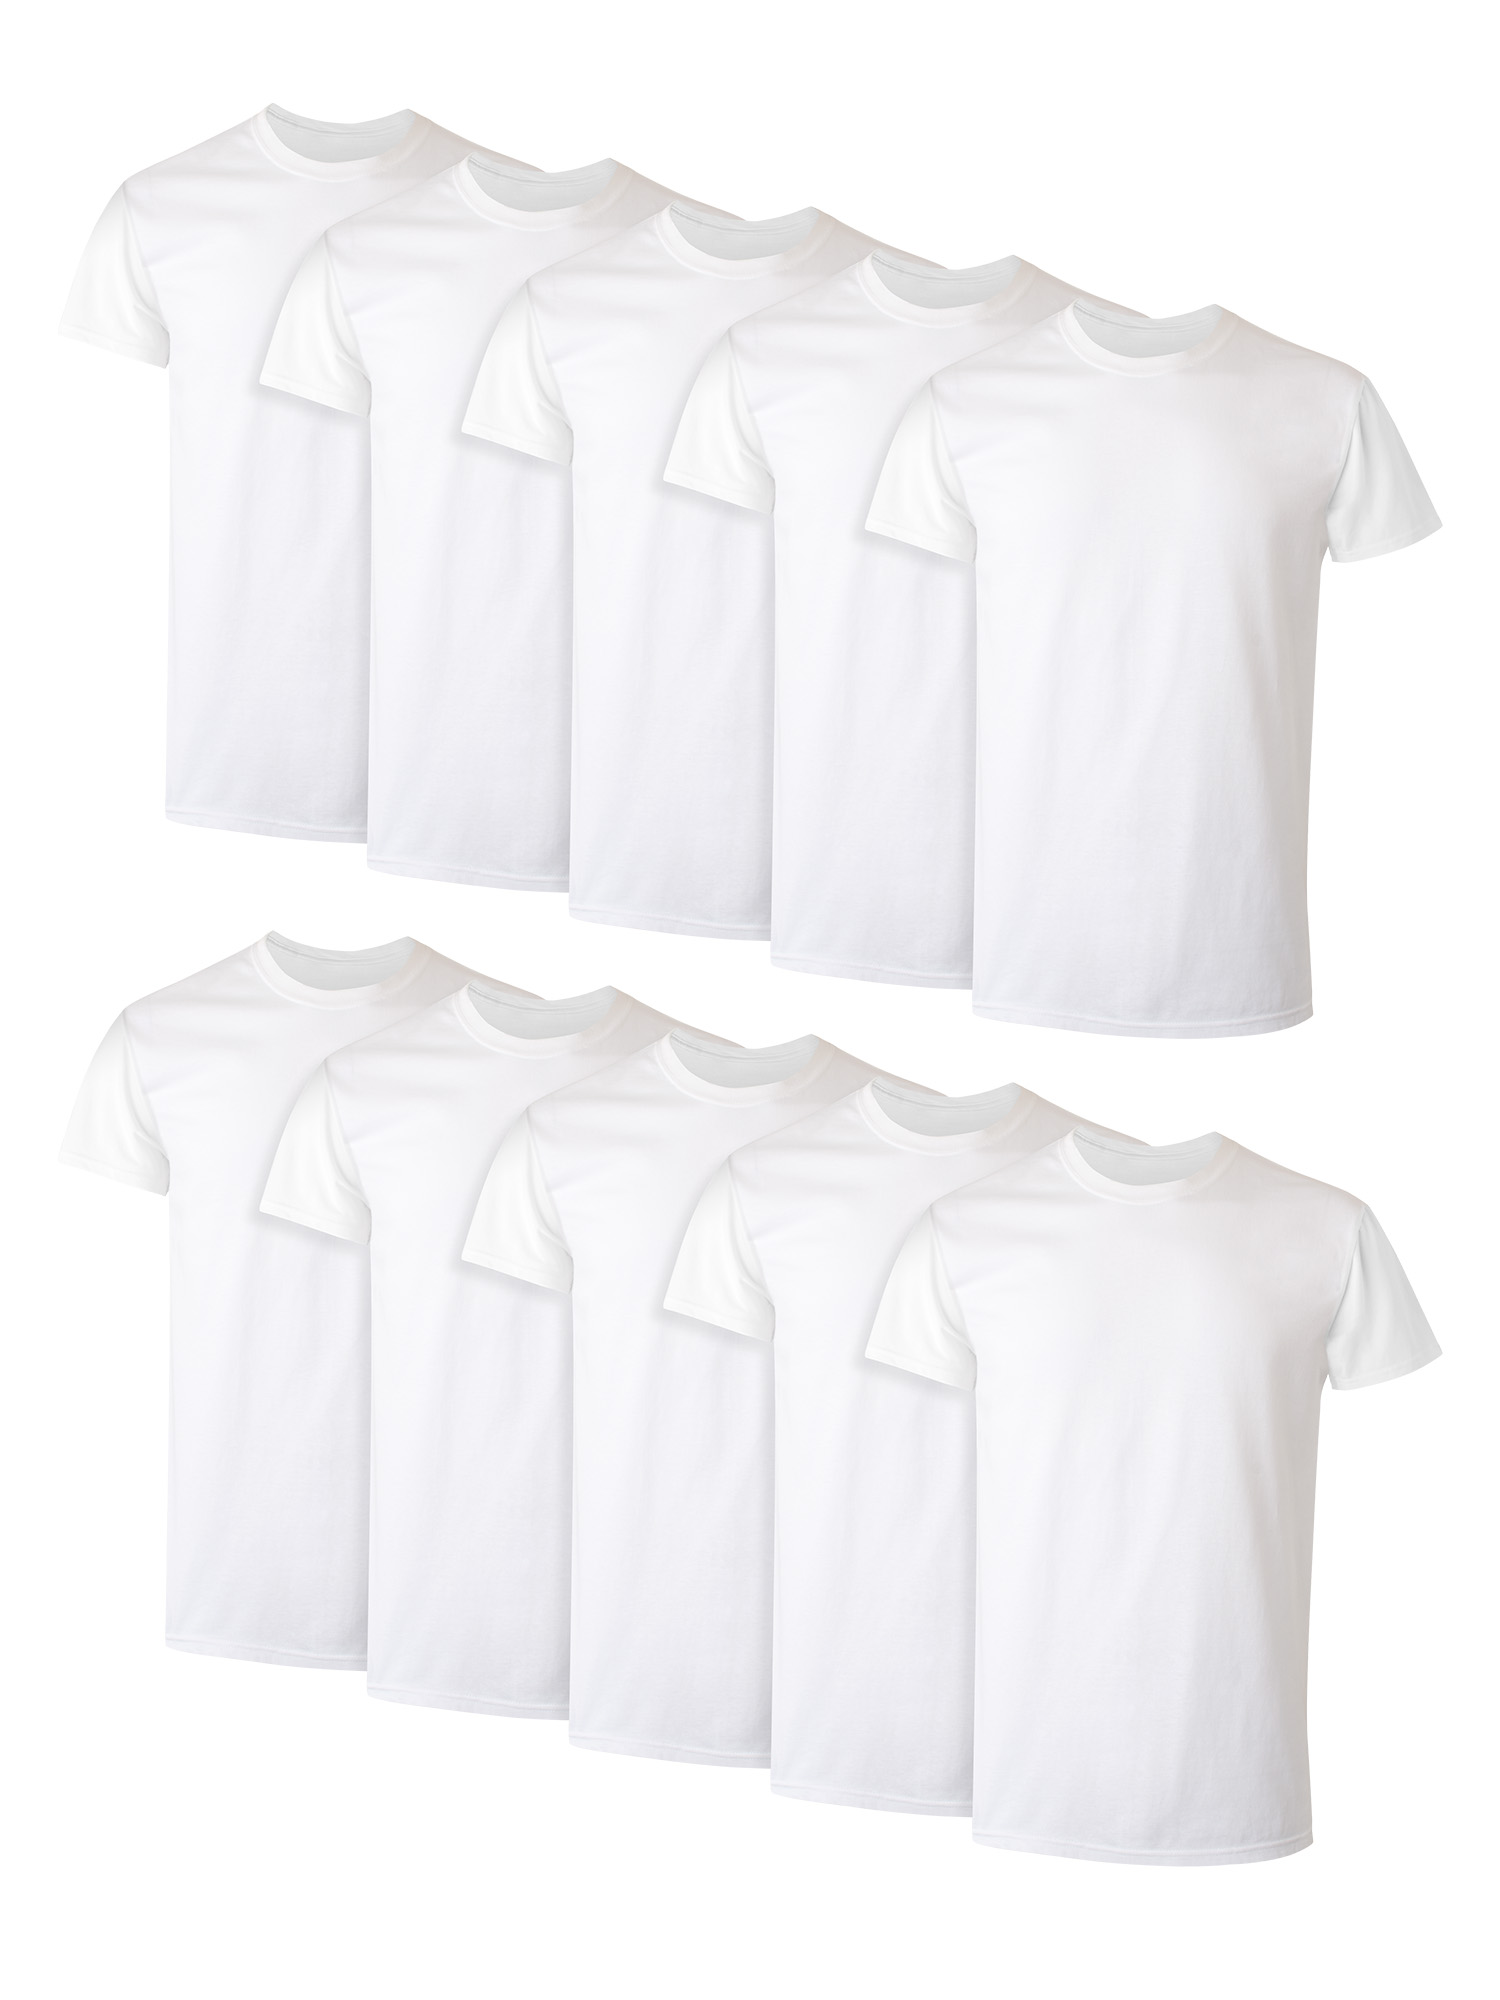 Hanes Men's Super Value Pack White Crew T-Shirt Undershirts, 10 Pack - image 1 of 10